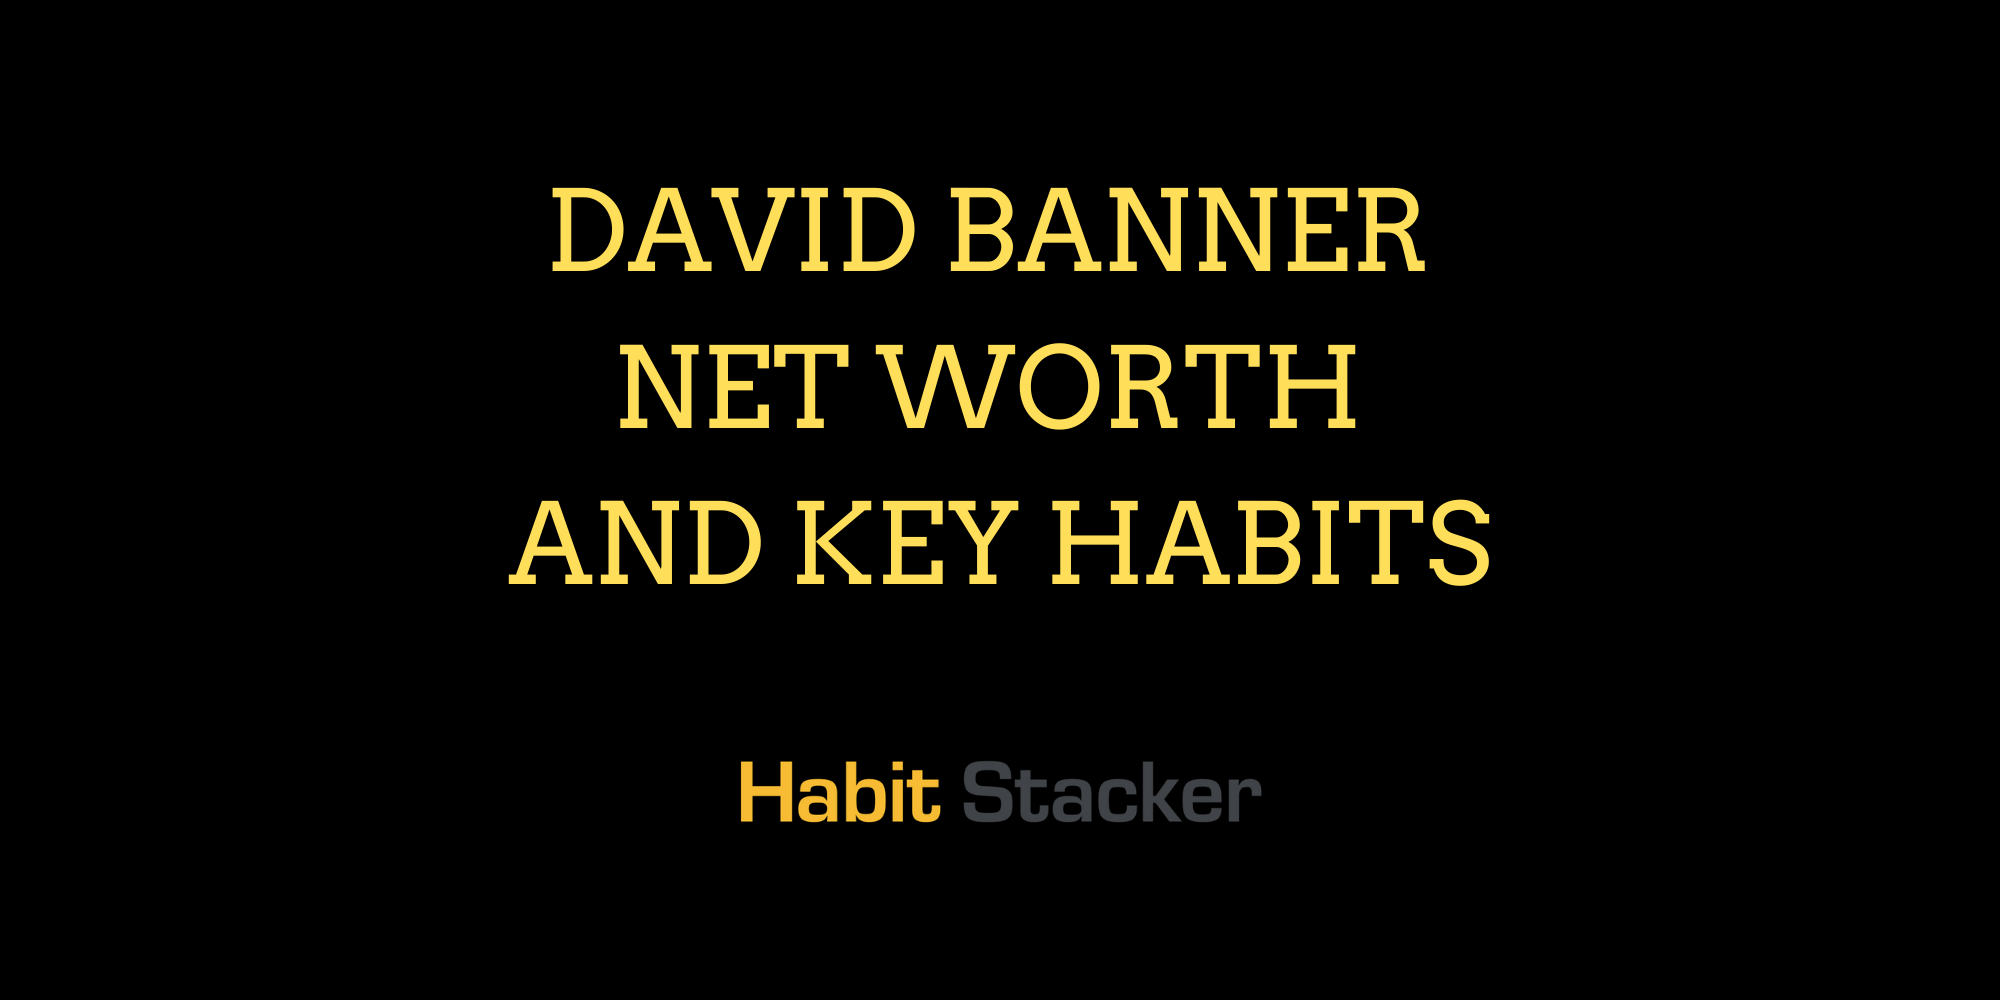 David Banner Net Worth and Key Habits